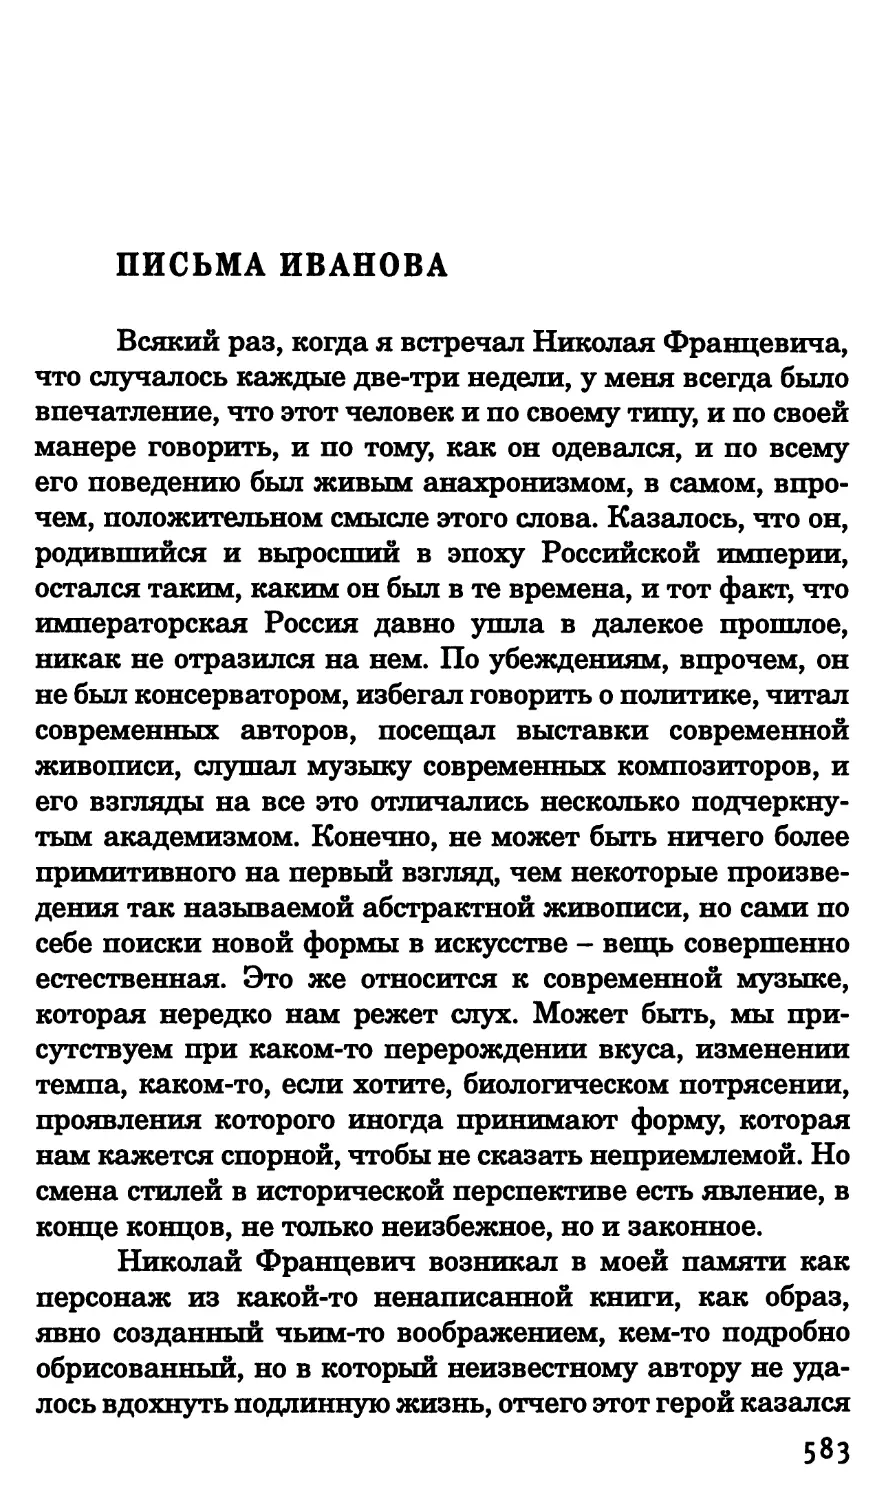 Письма Иванова